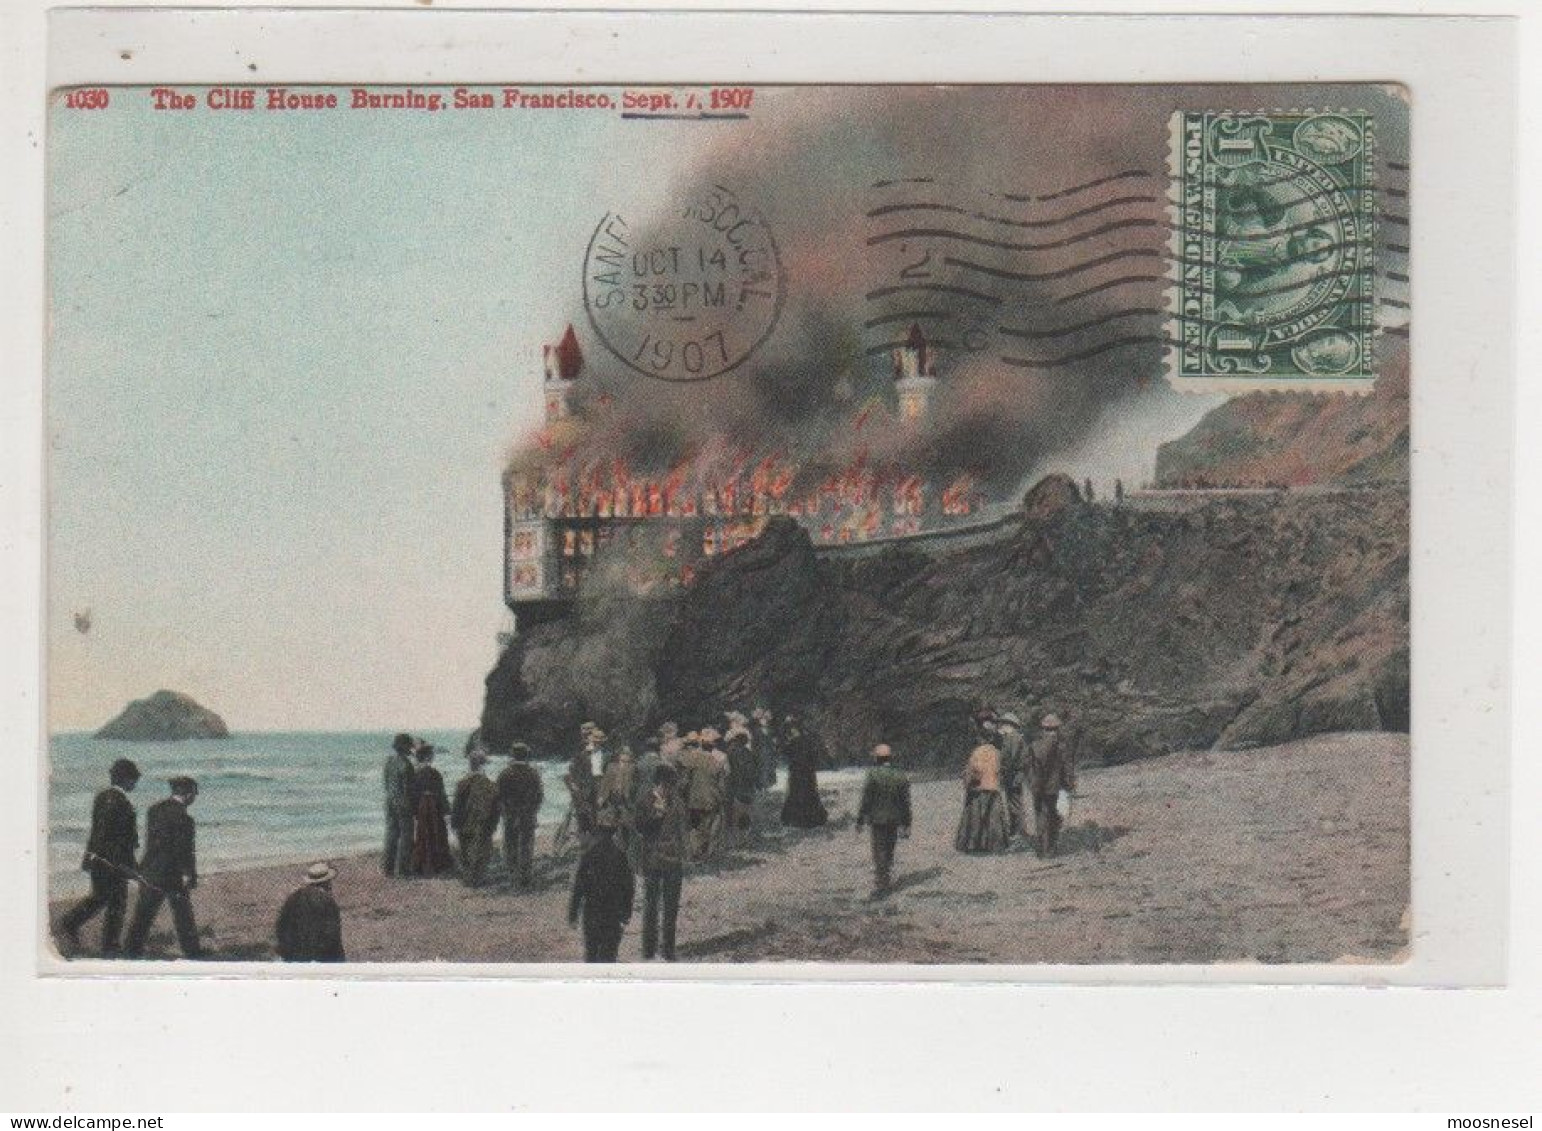 Antike Postkarte  THE CLIFF HOUSE BURNING, SEPT. 1907 - San Francisco